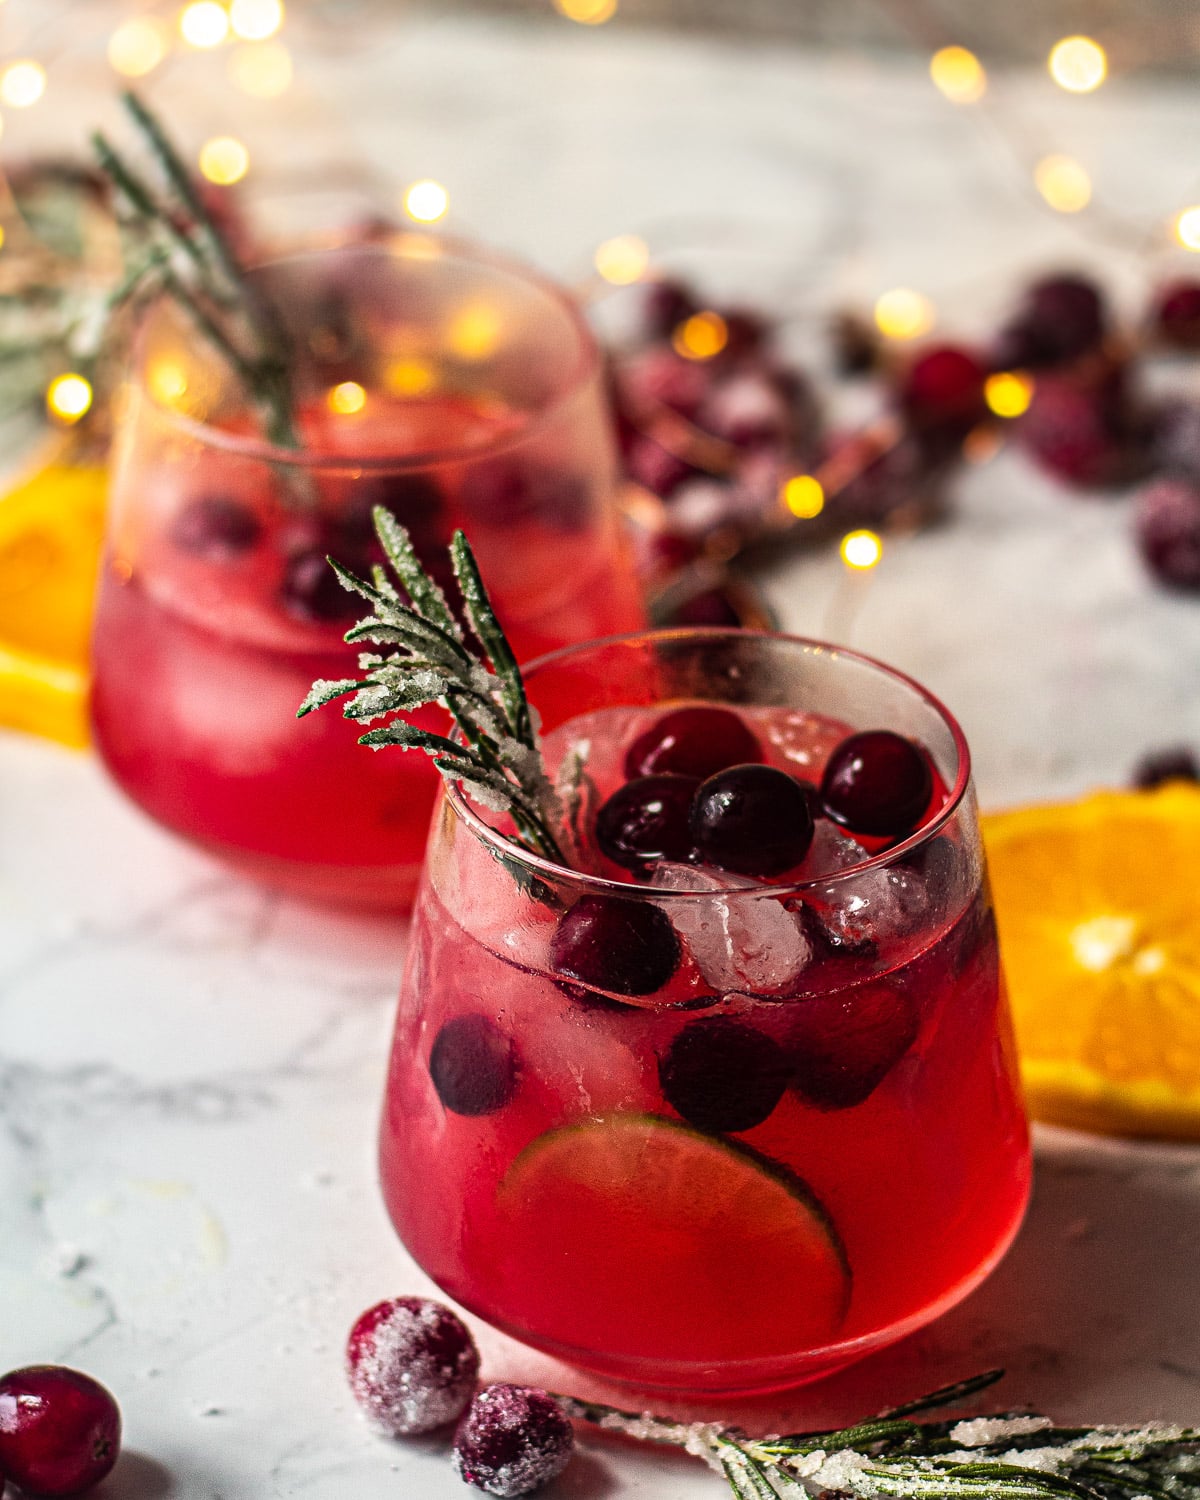 Cranberry Mistletoe Margaritas in a festive setting